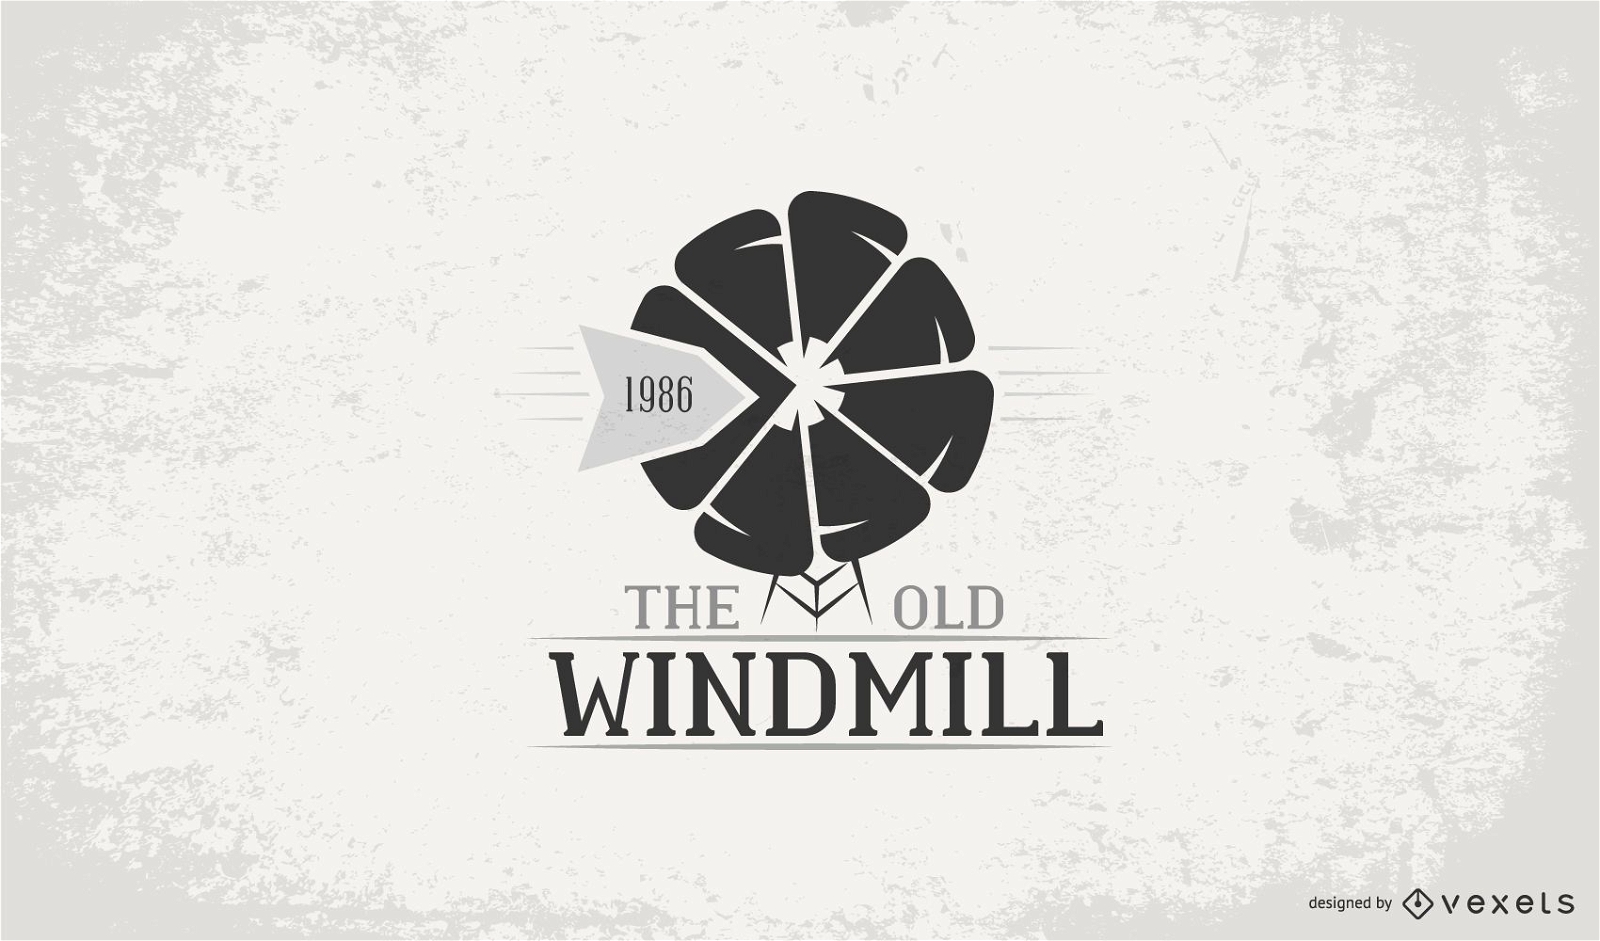 Windmill logo tamplate